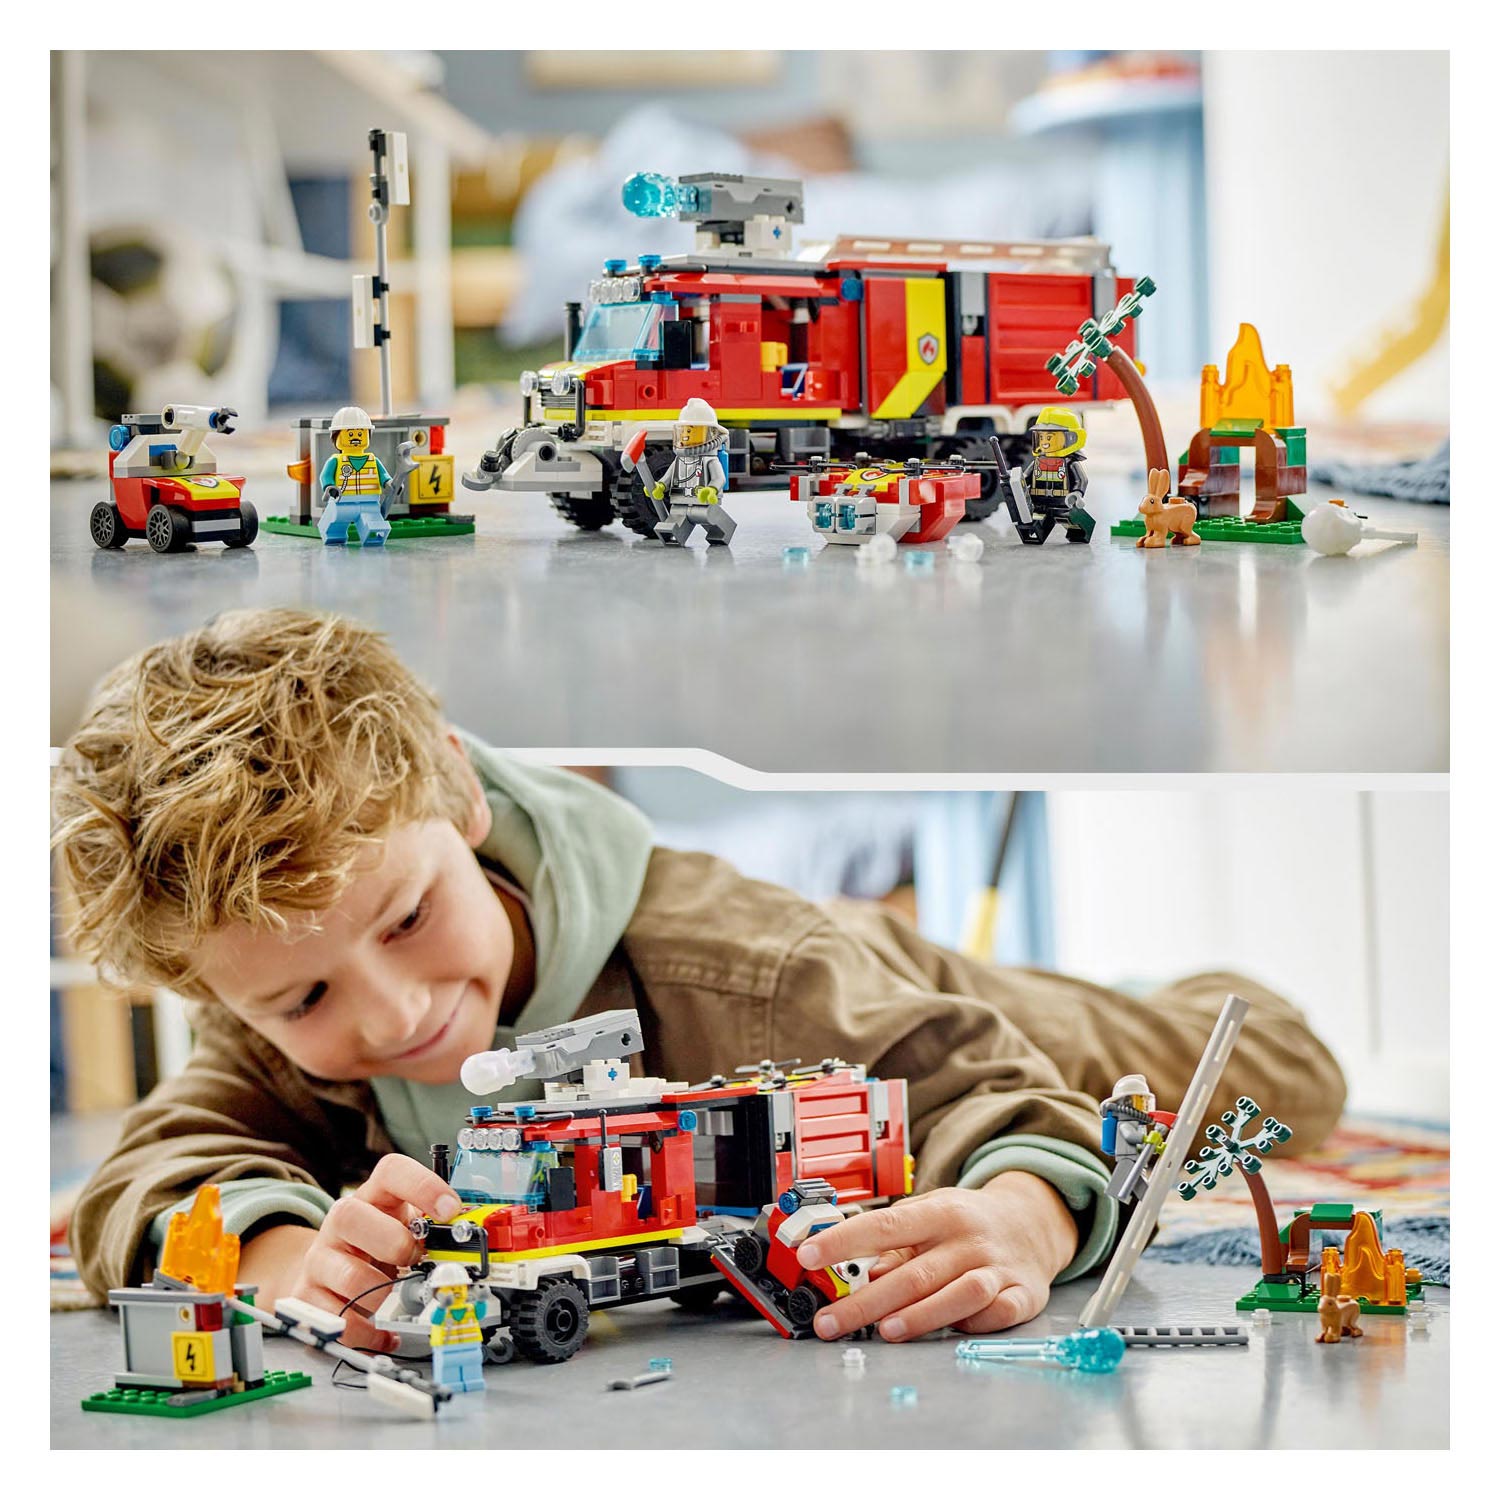 LEGO City 60374 Brandweerwagen